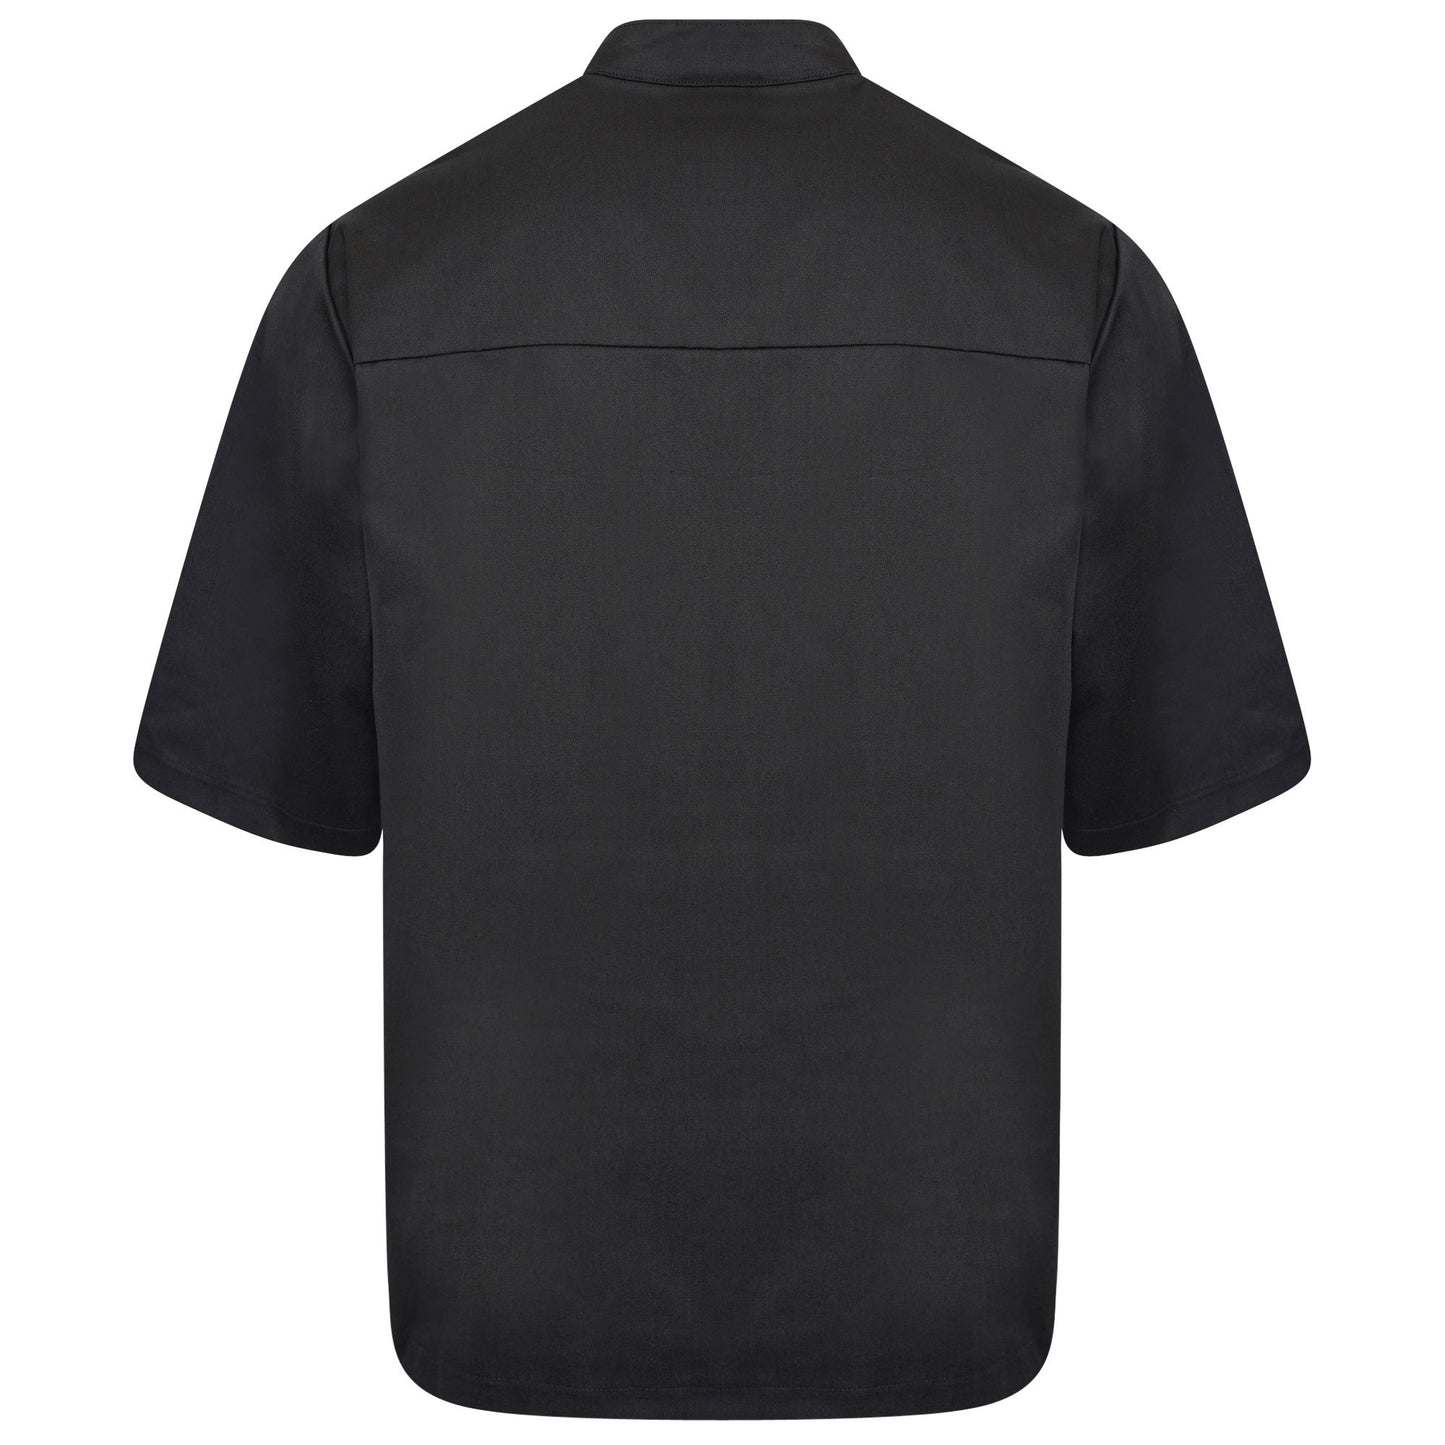 Black Chefs Jacket Short Sleeve